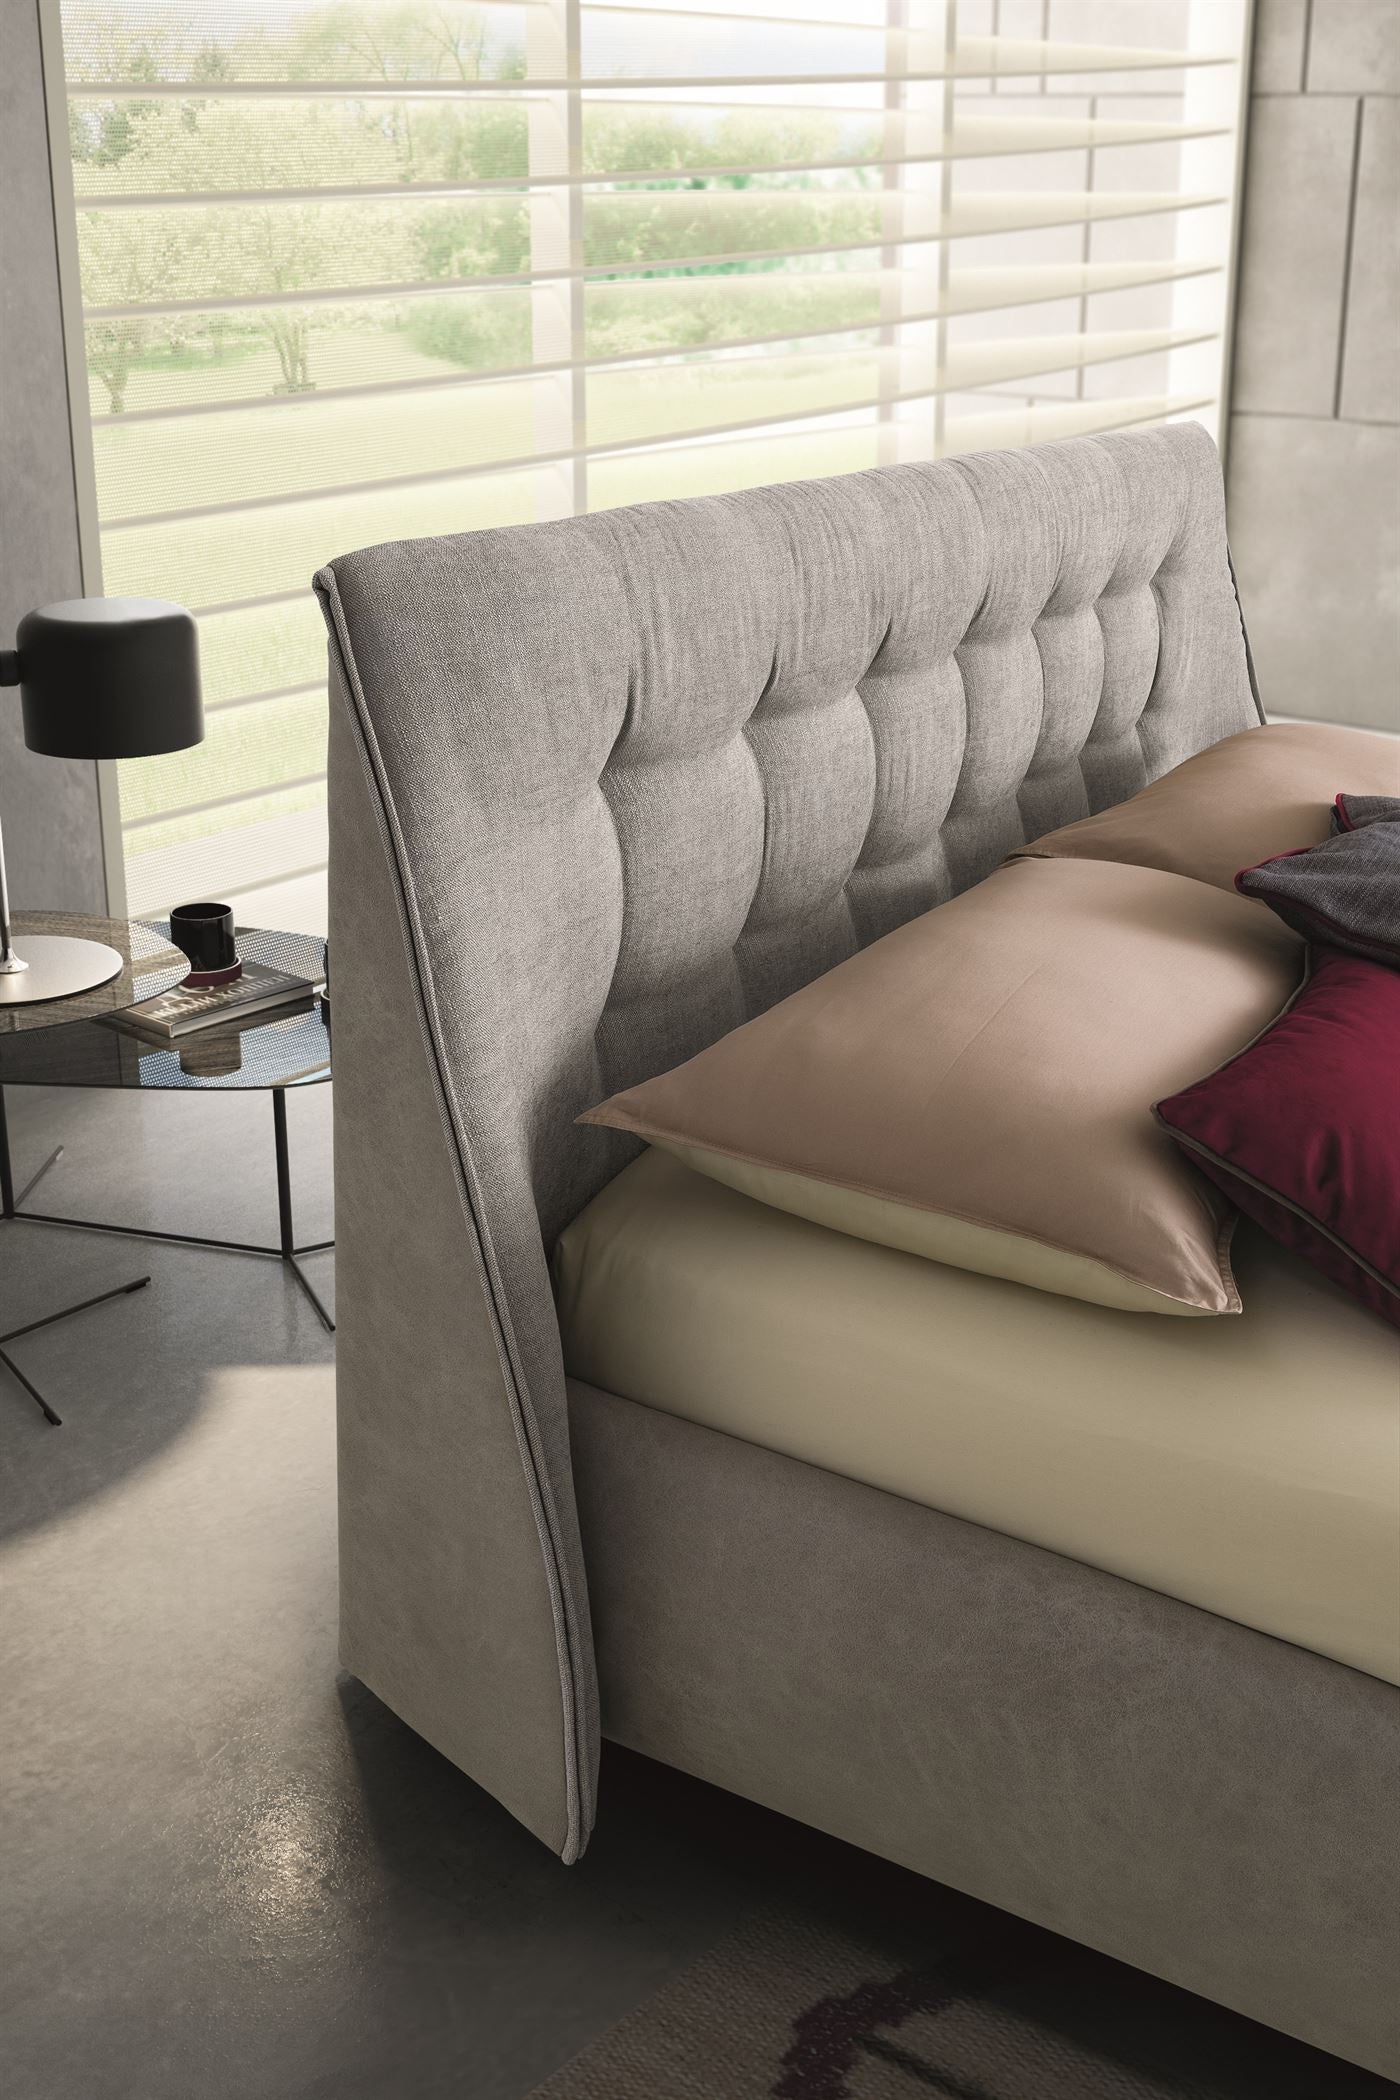 Guscio Storage Bed-Beds-Jennifer Furniture